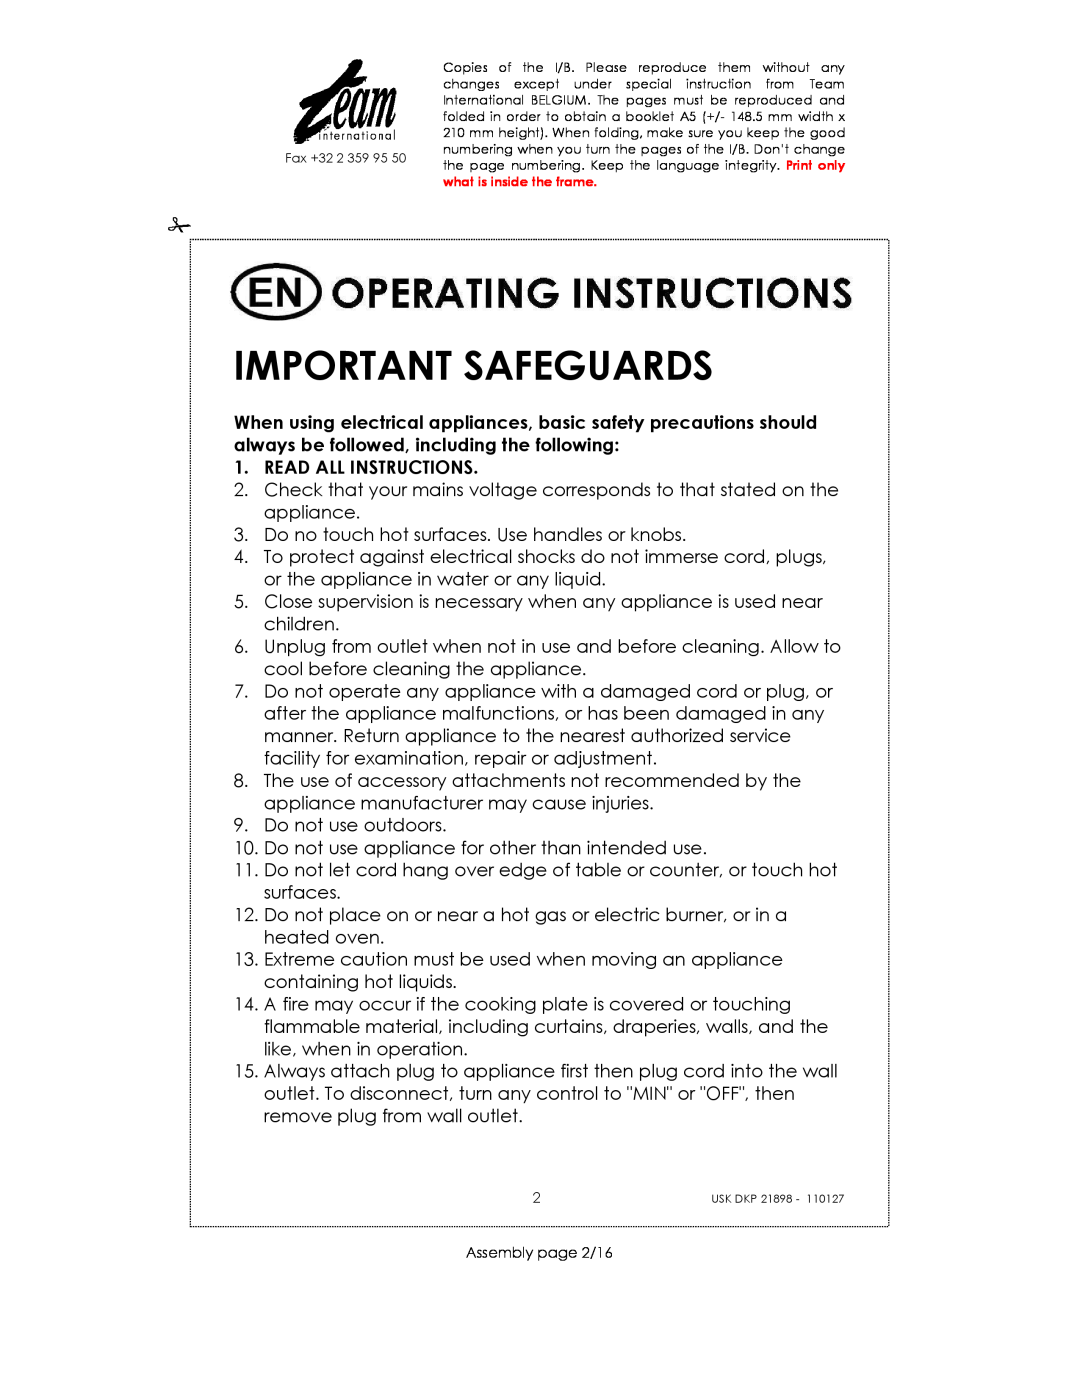 Kalorik USK DKP 21898 manual Important Safeguards, Read All Instructions 